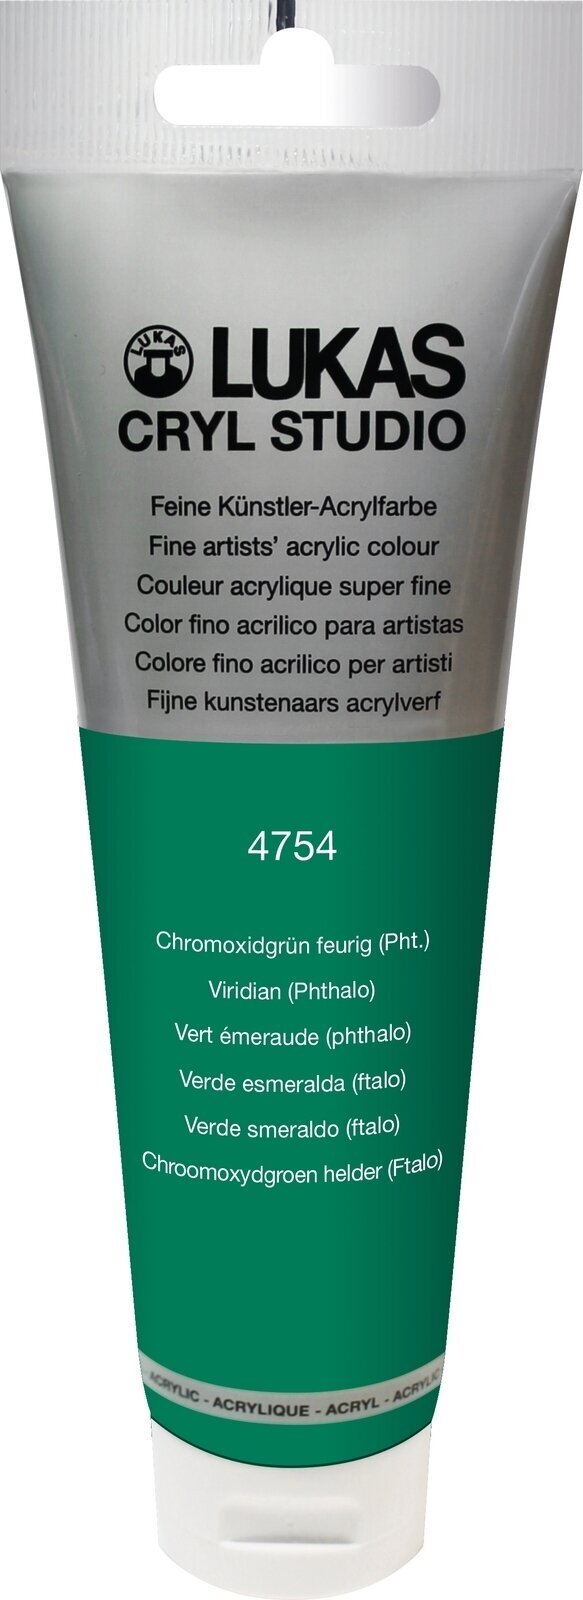 Akrylová farba Lukas Cryl Studio Acrylic Paint Plastic Tube Akrylová farba Viridian (Phthalo) 125 ml 1 ks